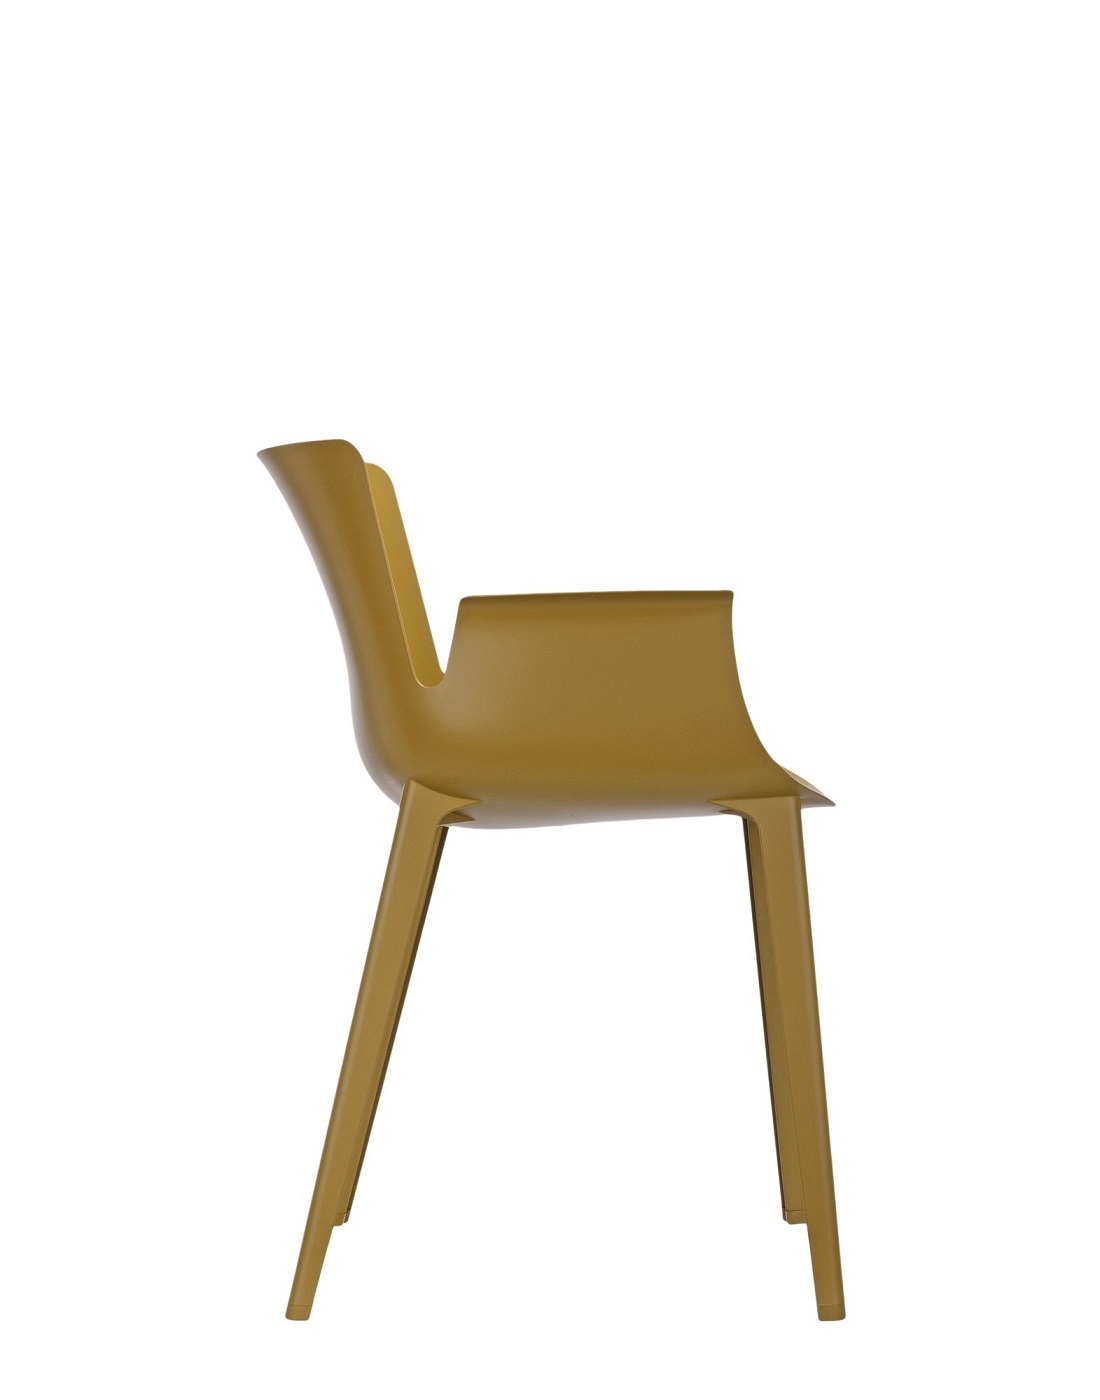 chair-piuma-philippe-starck-SE-side